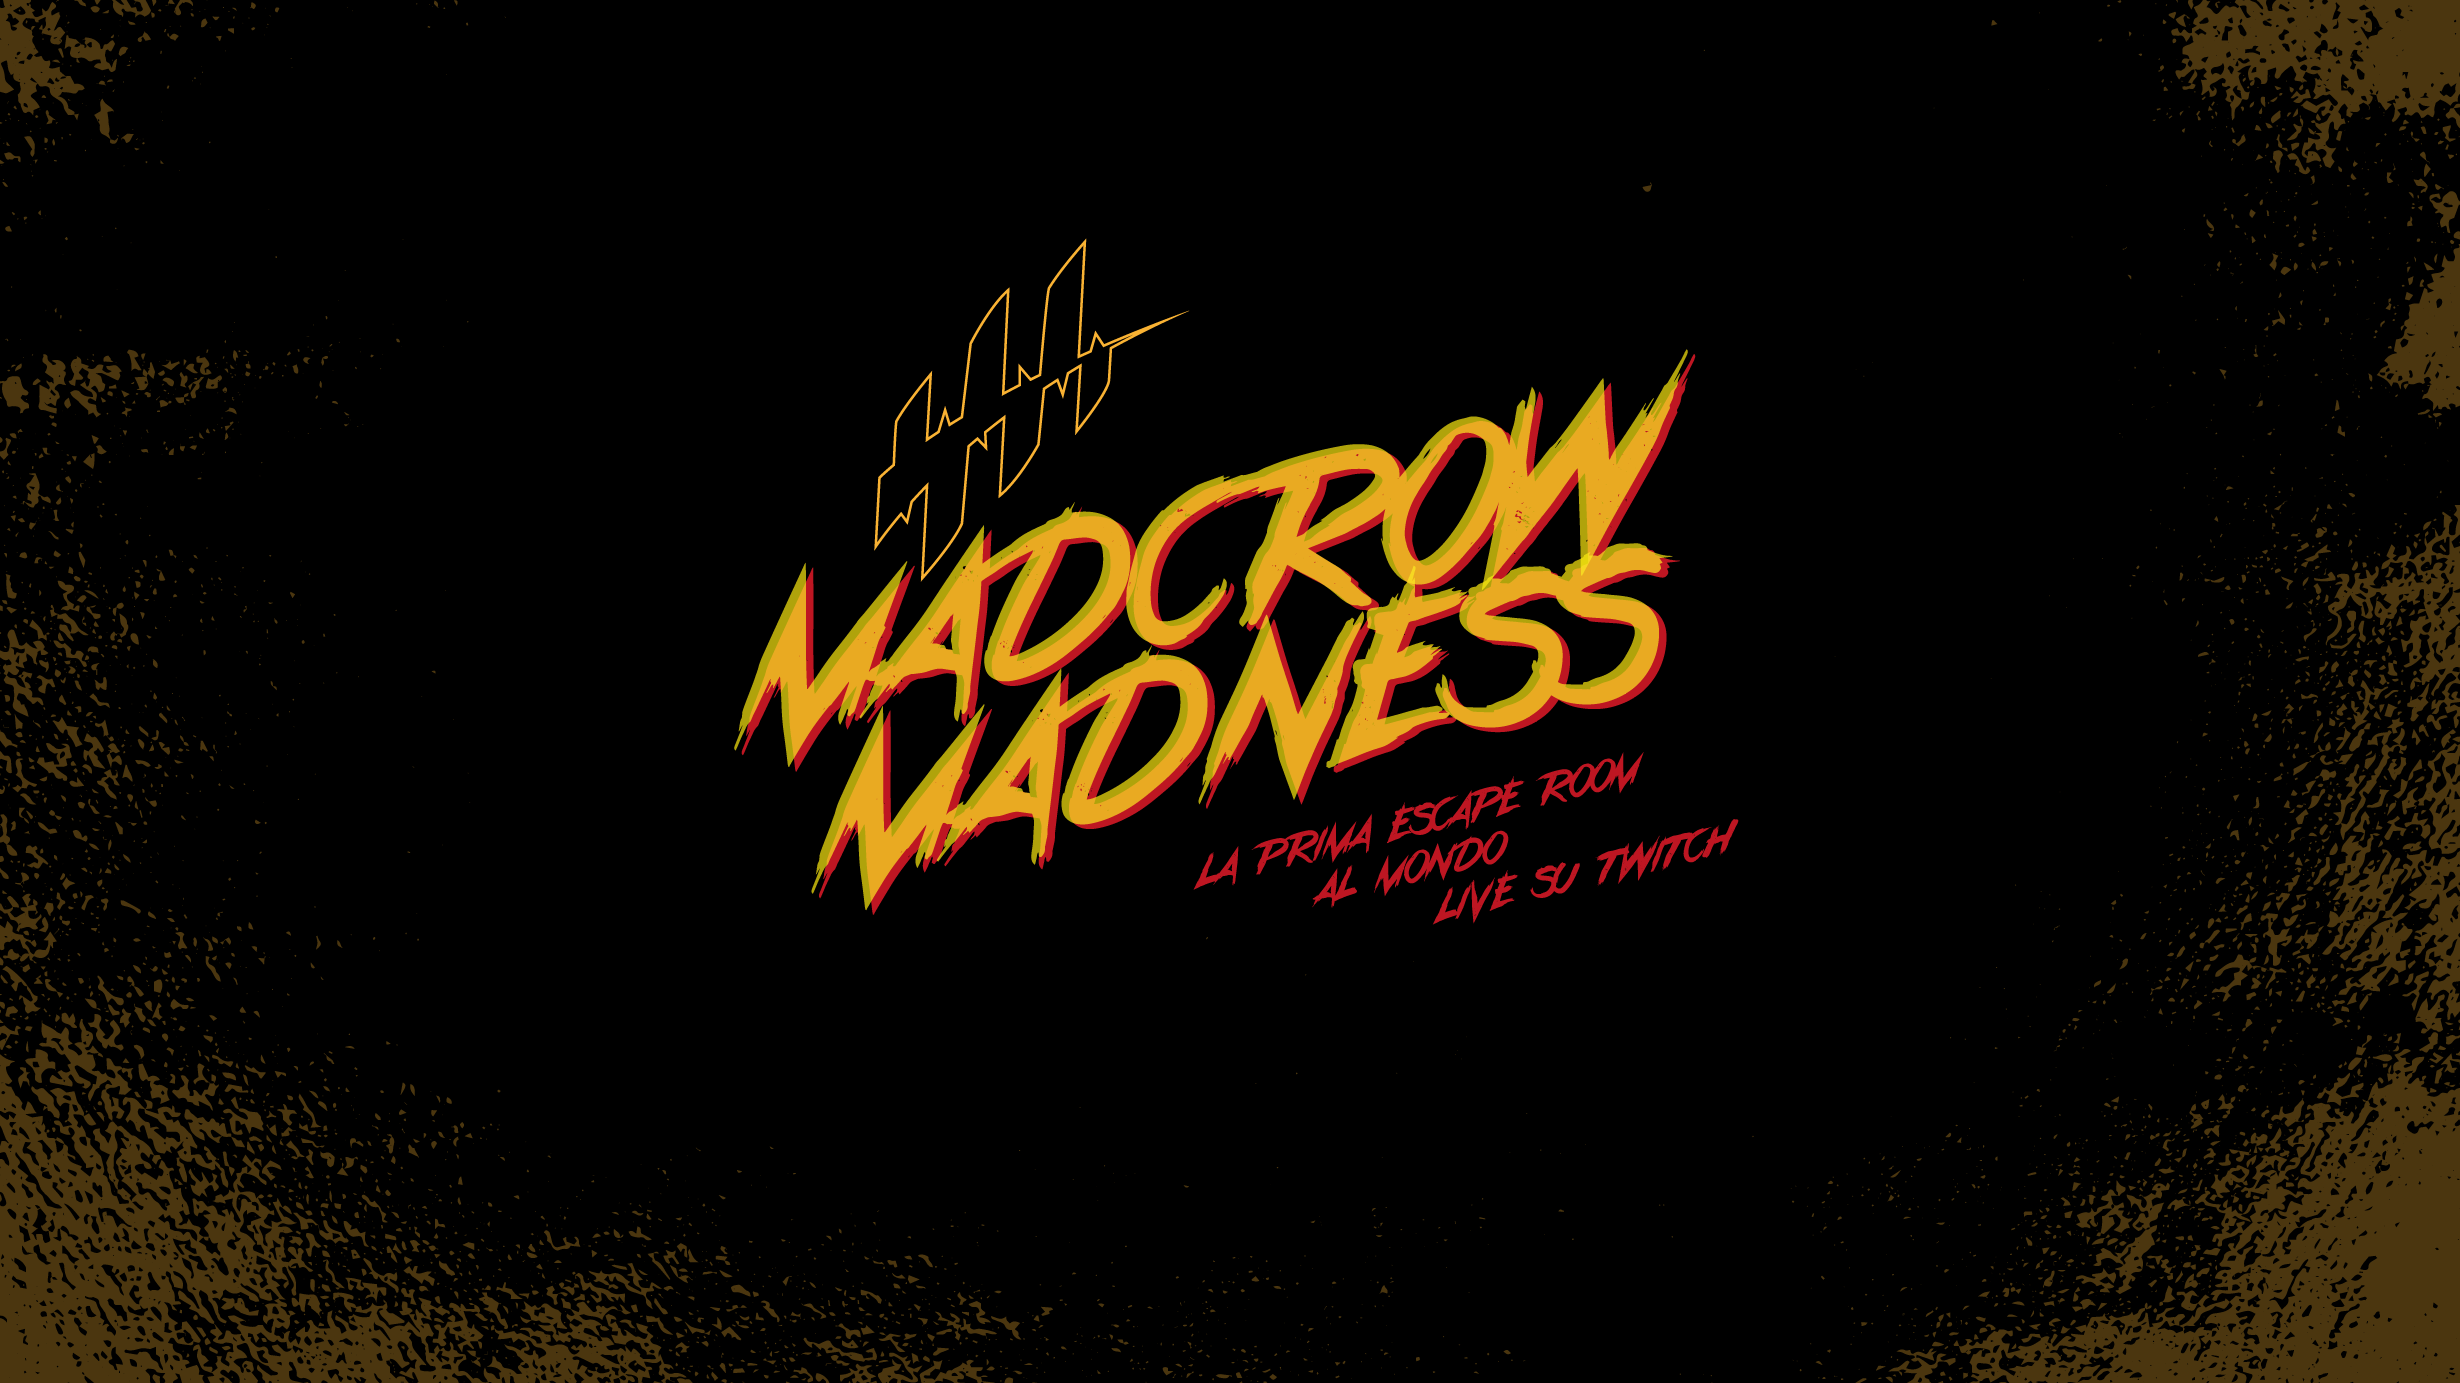 Madcrow Madness